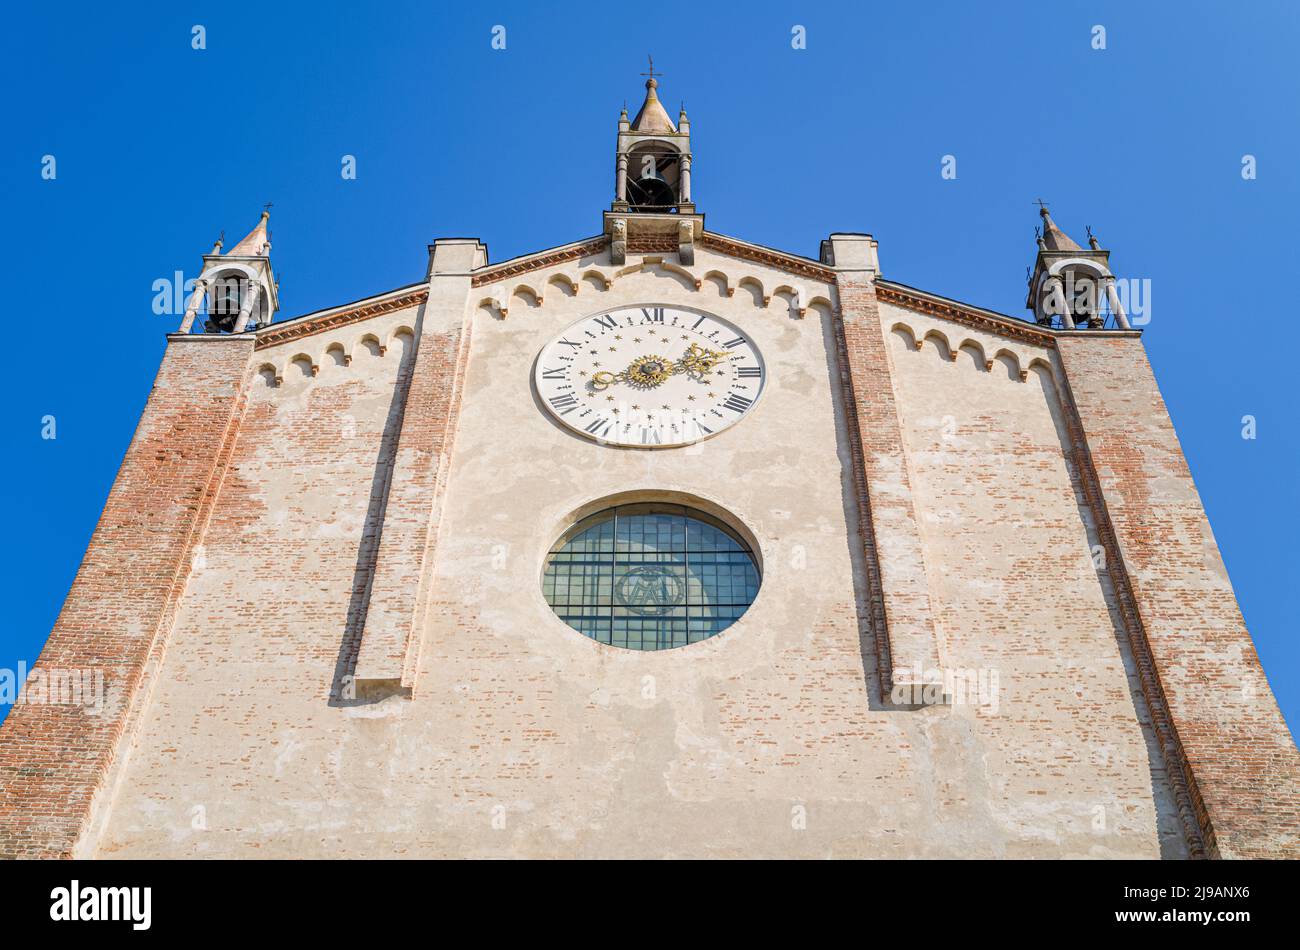 Italia, Montagnana, vista hacia arriba de la fachada de la catedral de Santa Maria Assunta Foto de stock